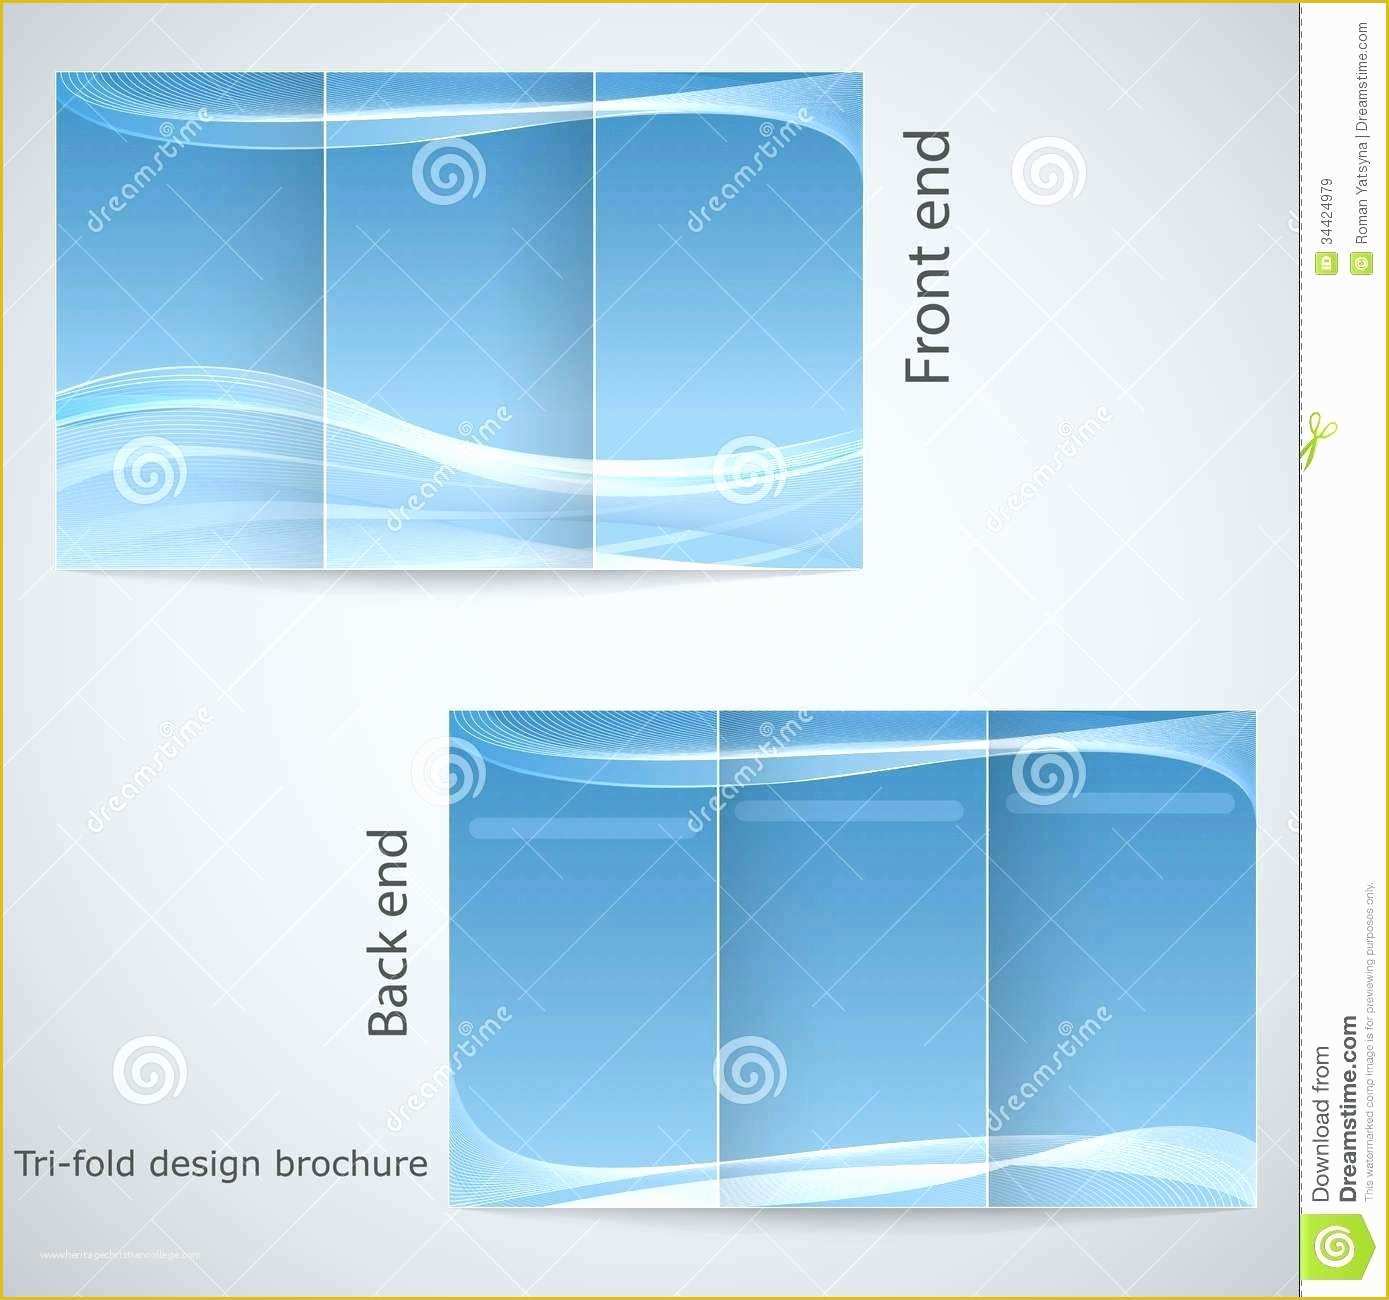 Free Tri Fold Brochure Templates Microsoft Word Of Free Tri Fold Brochure Templates Microsoft Word Pics